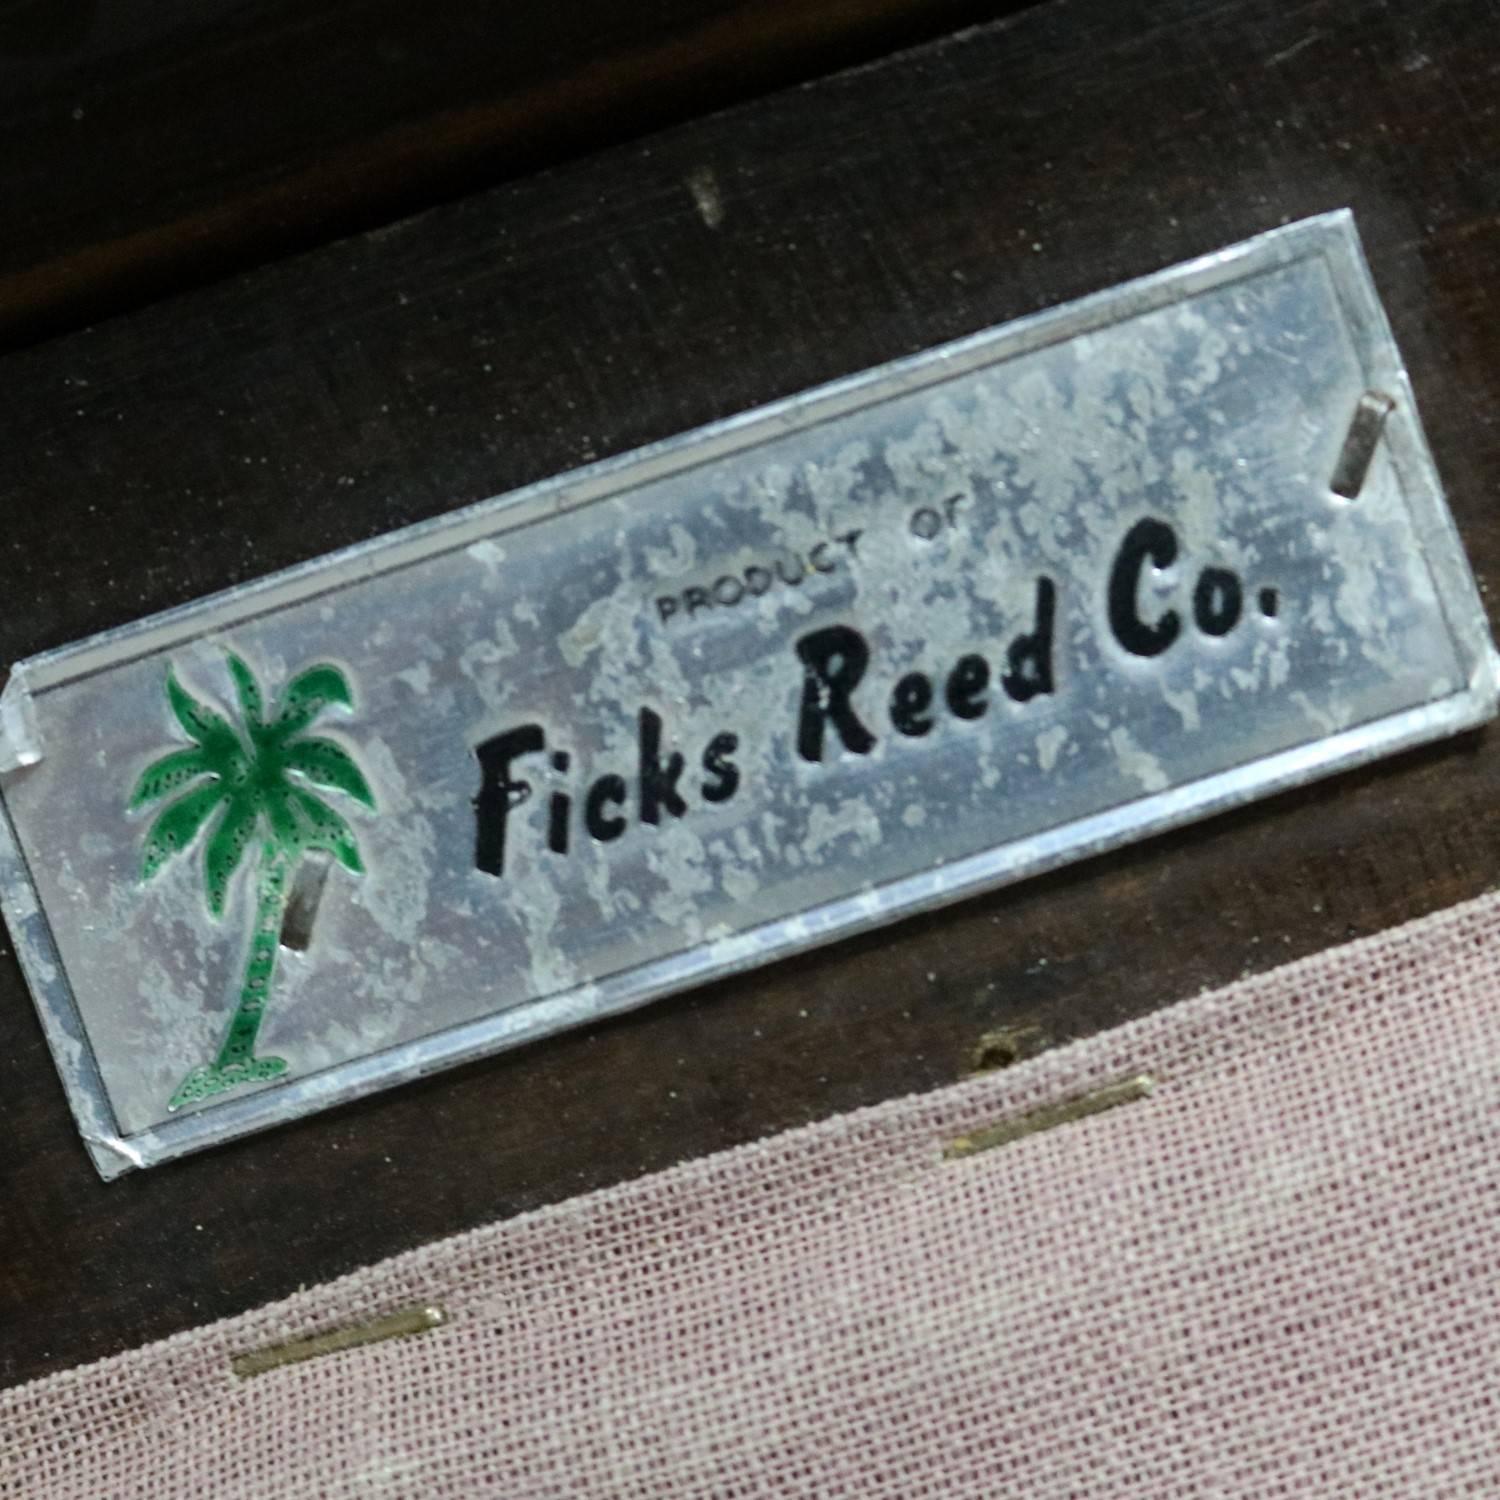 ficks reed furniture